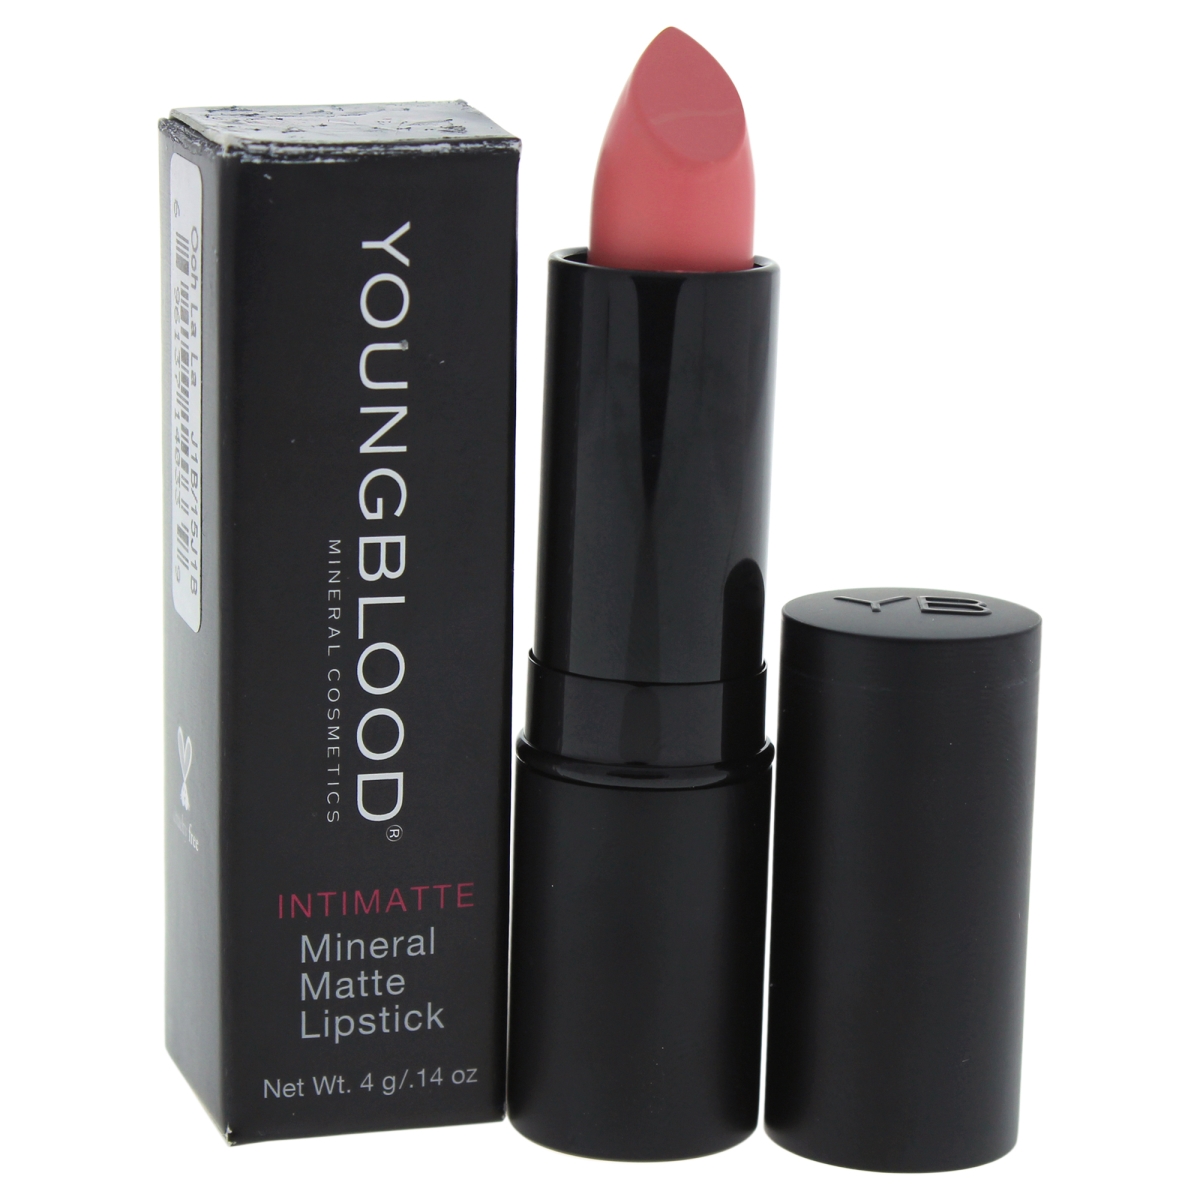 W-c-11988 Intimatte Mineral Matte Lipstick - Ooh La La For Women - 0.14 Oz